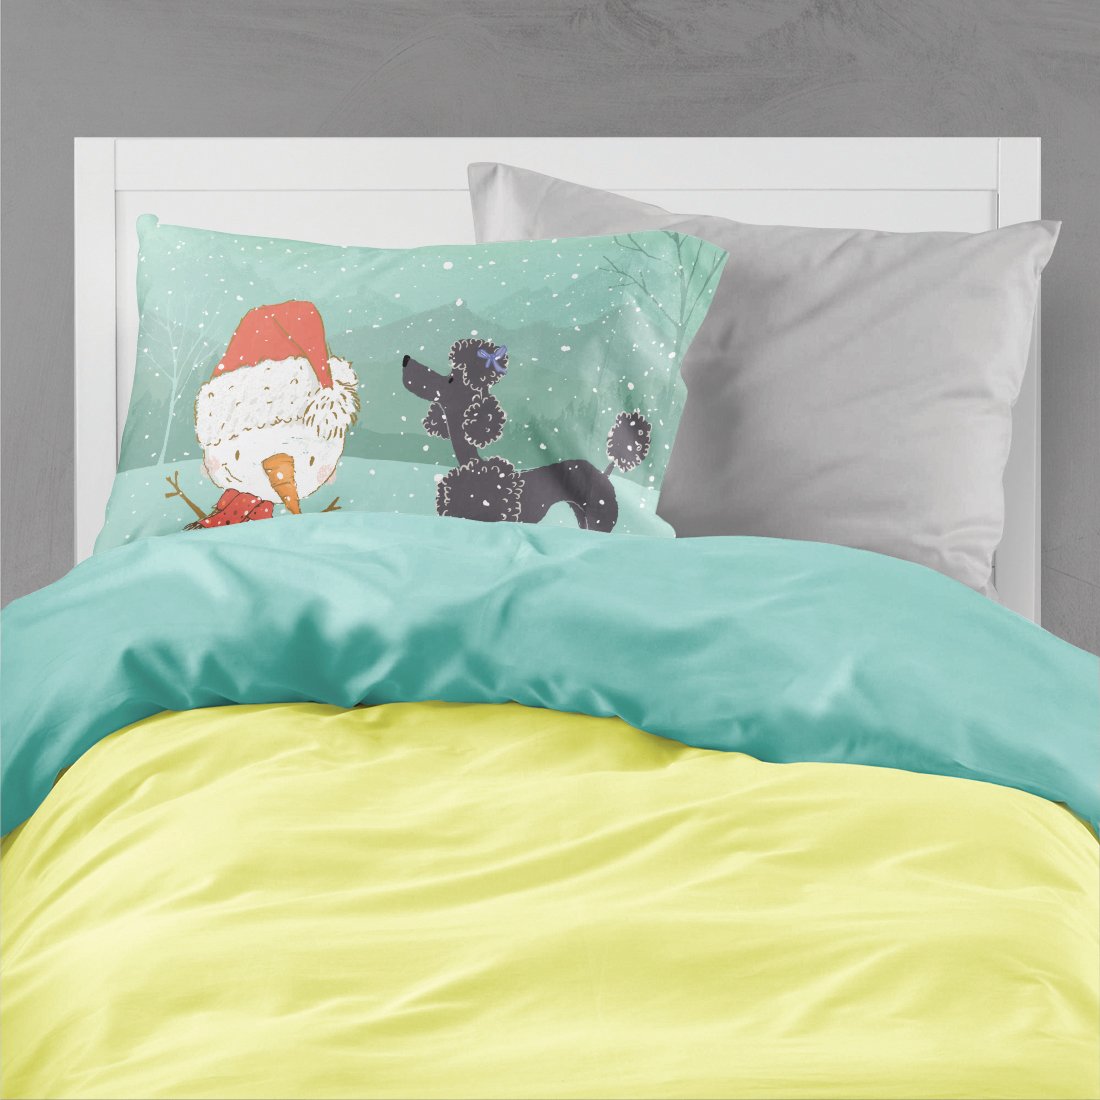 Black Poodle Snowman Christmas Fabric Standard Pillowcase CK2064PILLOWCASE by Caroline's Treasures